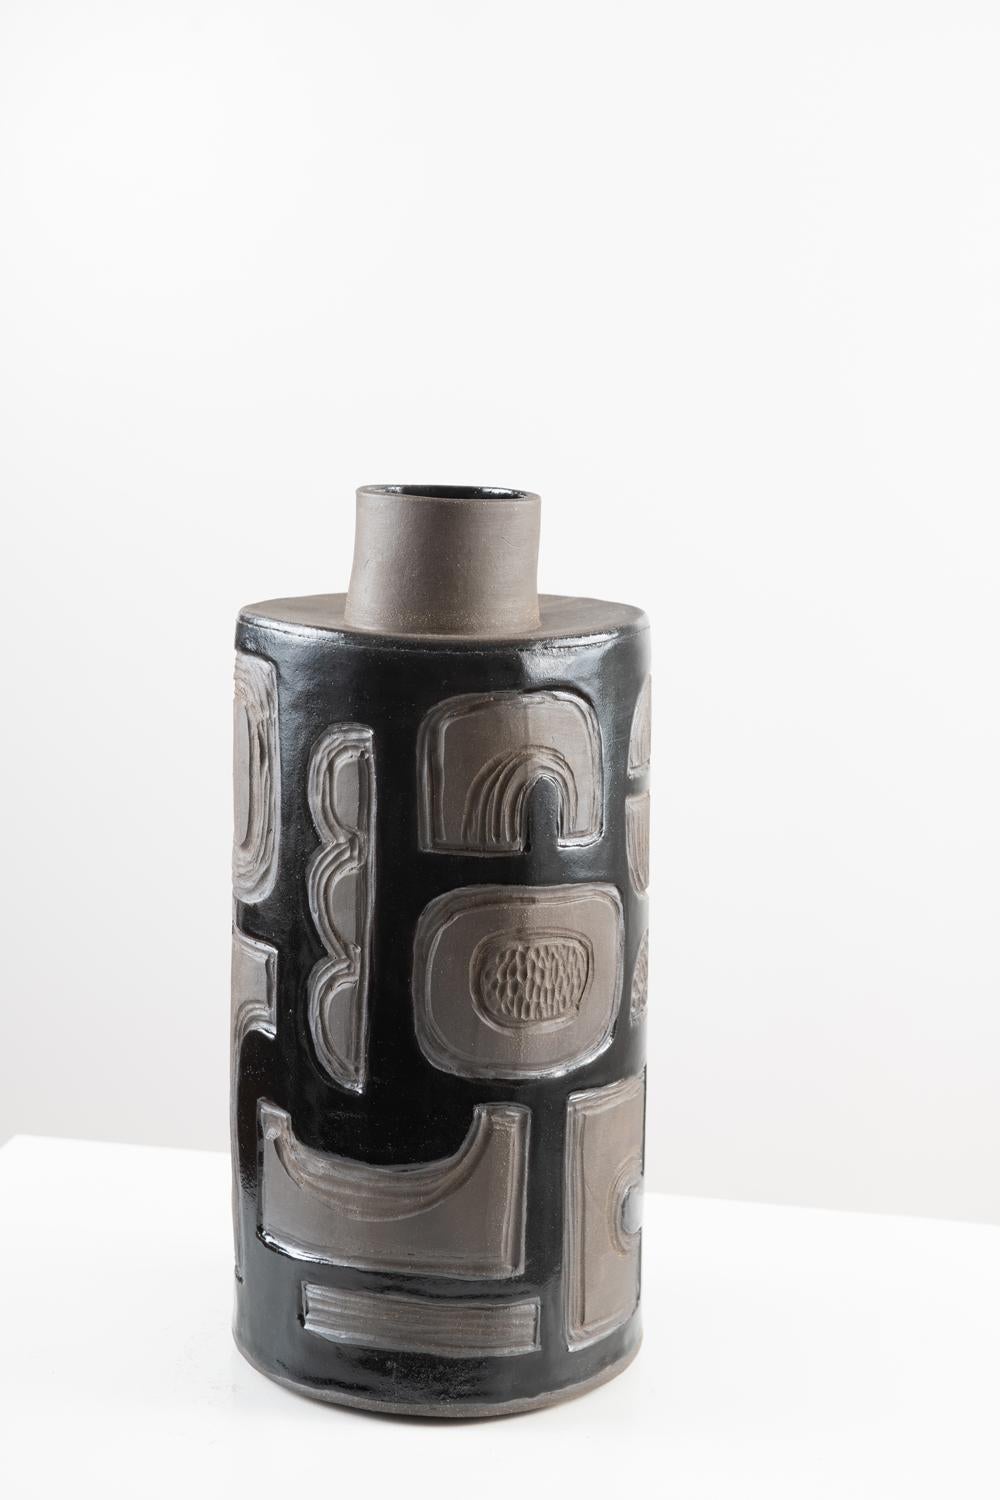 Trish DeMasi
Moderno Vessel, 2021
Glasierte Keramik
Maße: 9 x 9 x 18 Zoll.